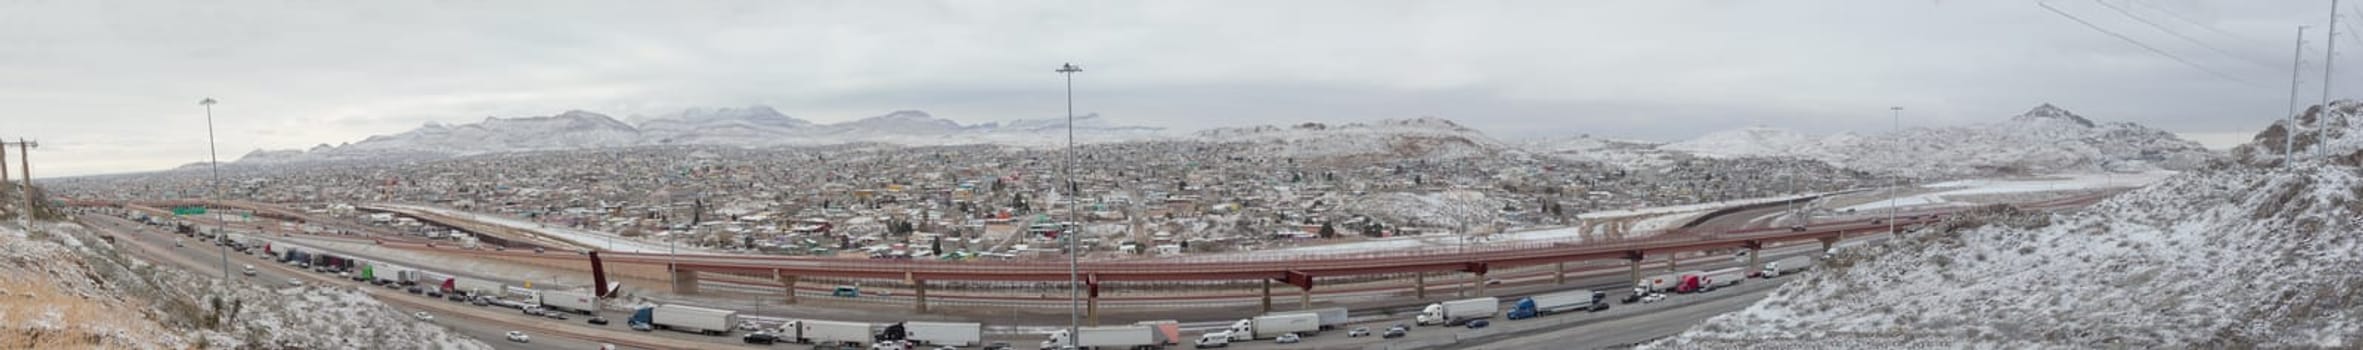 Ciudad Juarez, Chihuahua - Mexico - February 2022 - snow mountain and highway panorama